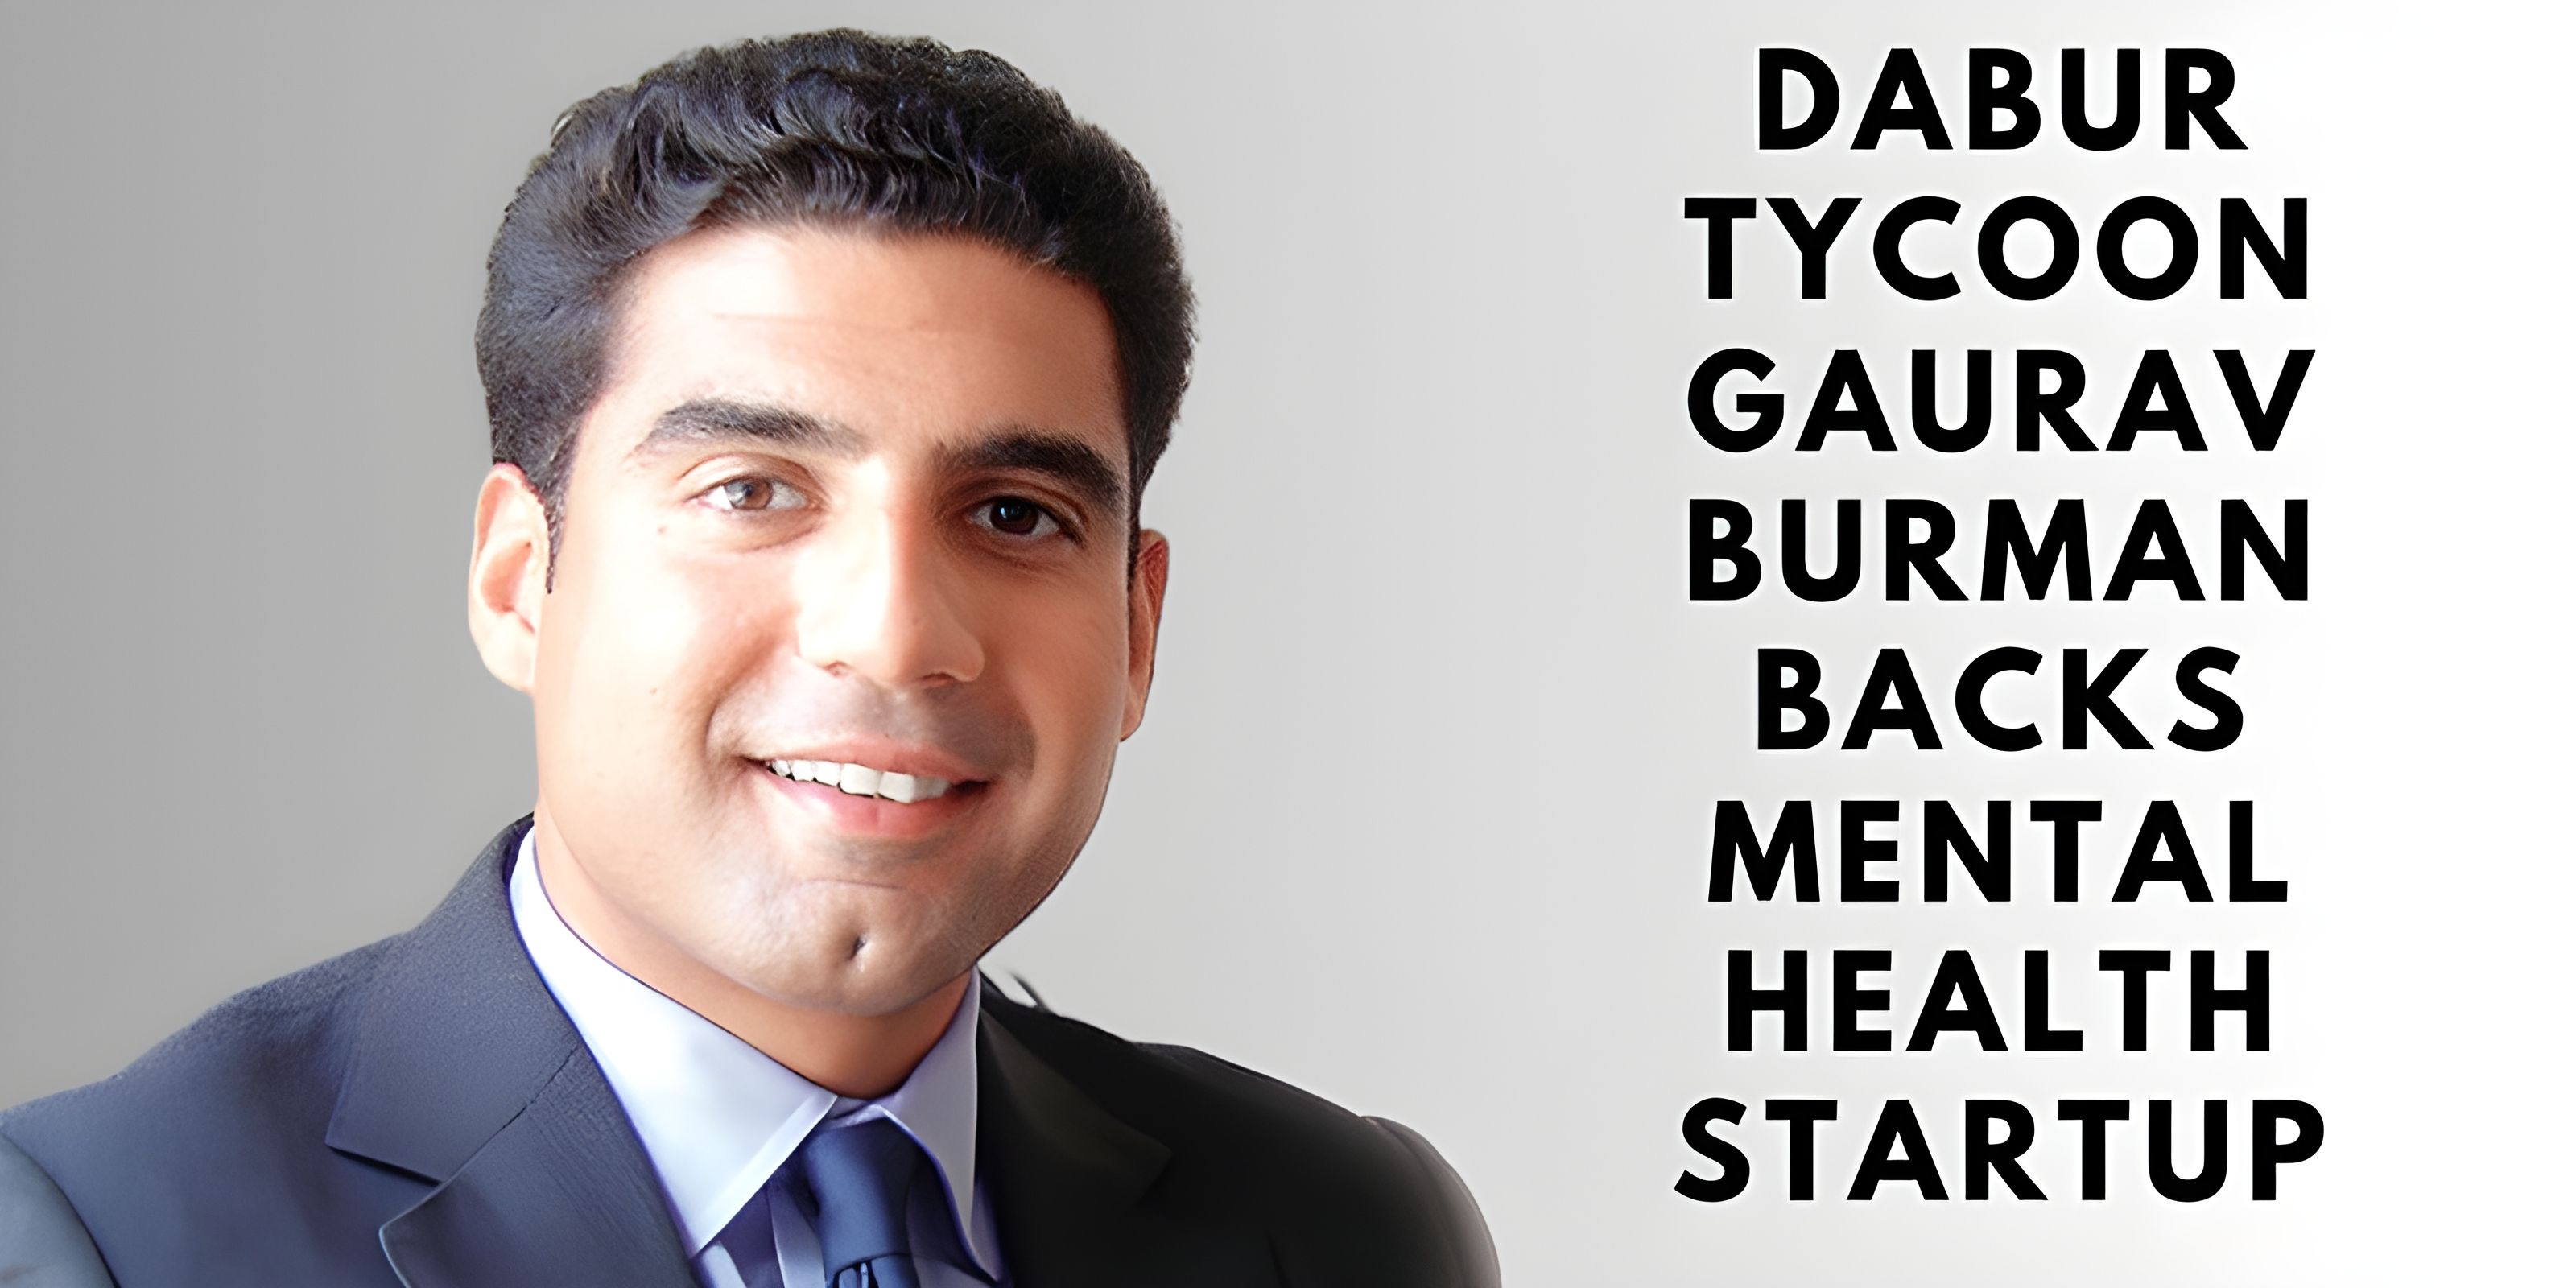 Dabur Tycoon Gaurav Burman Backs Mental Health Startup